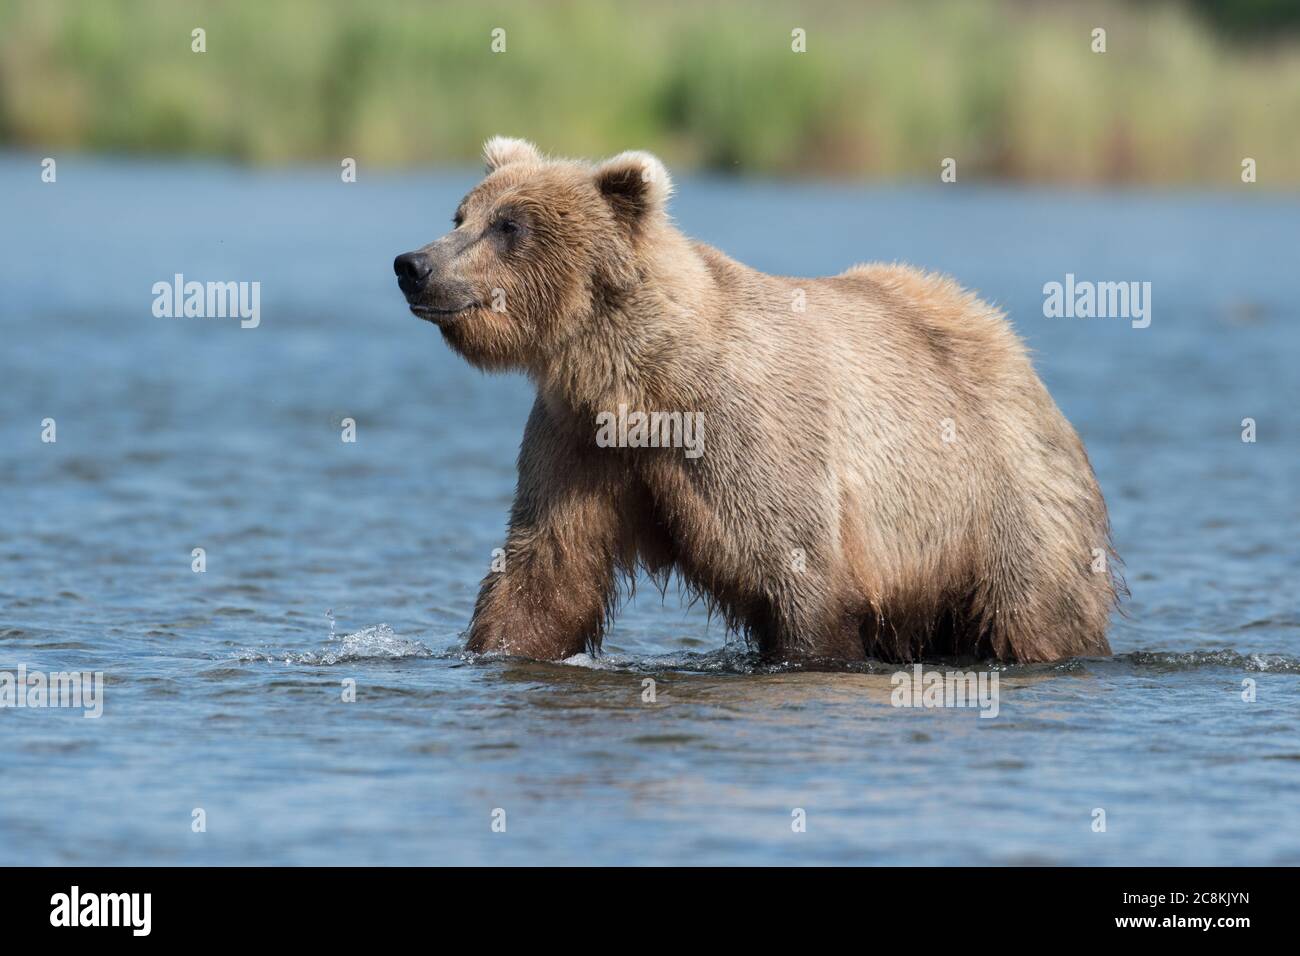 An Alaskan brown bear wading through the water of Brooks River in Katmai National Park, Alaska Stock Photo